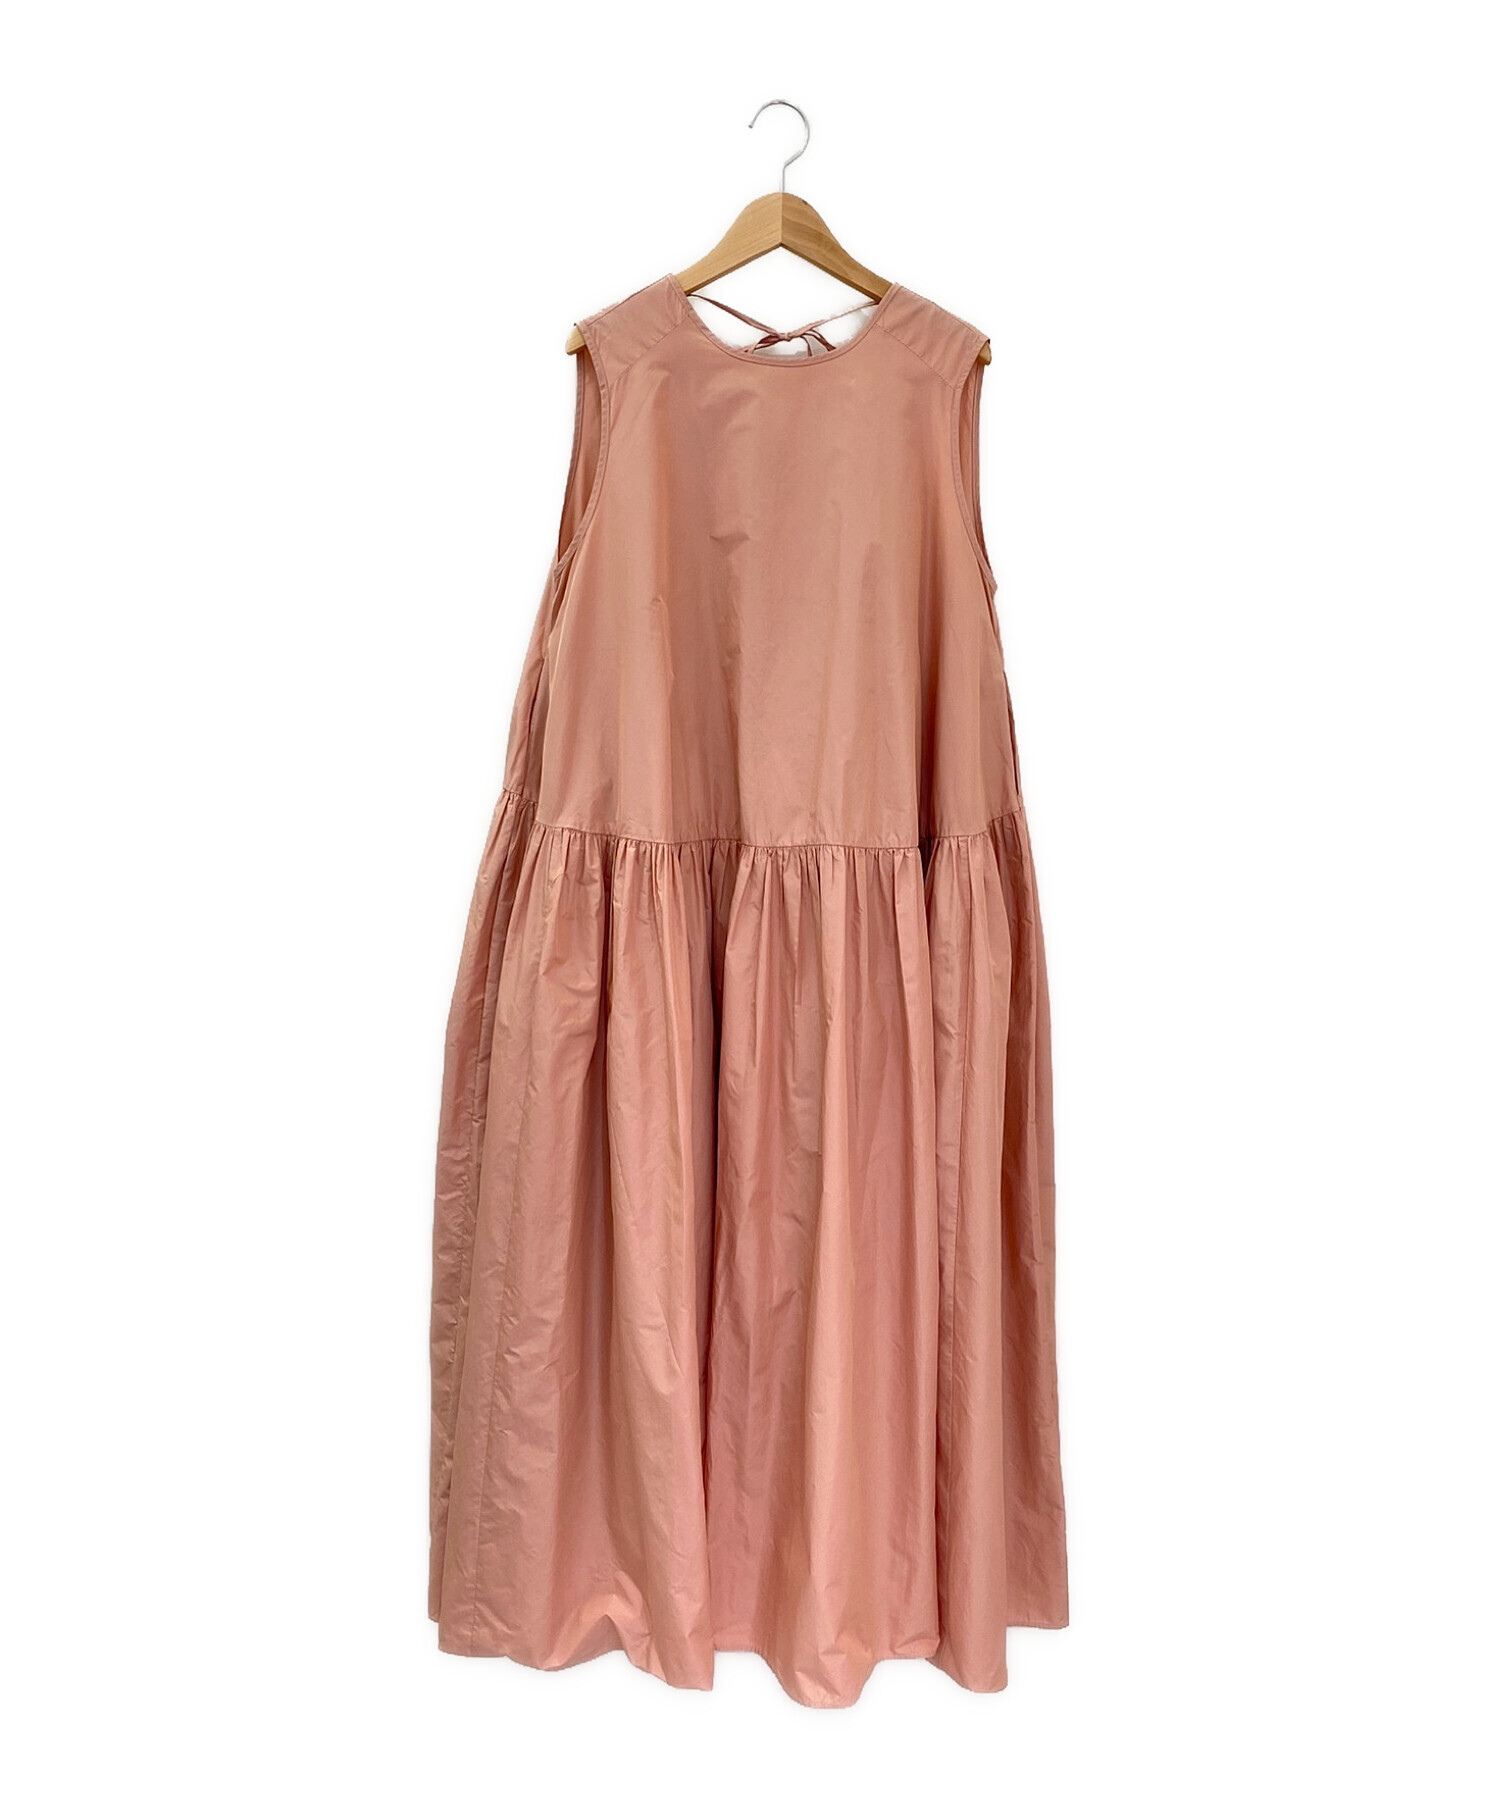 machatt (マチャット) メモリーボリュームドレス ピンク サイズ:F